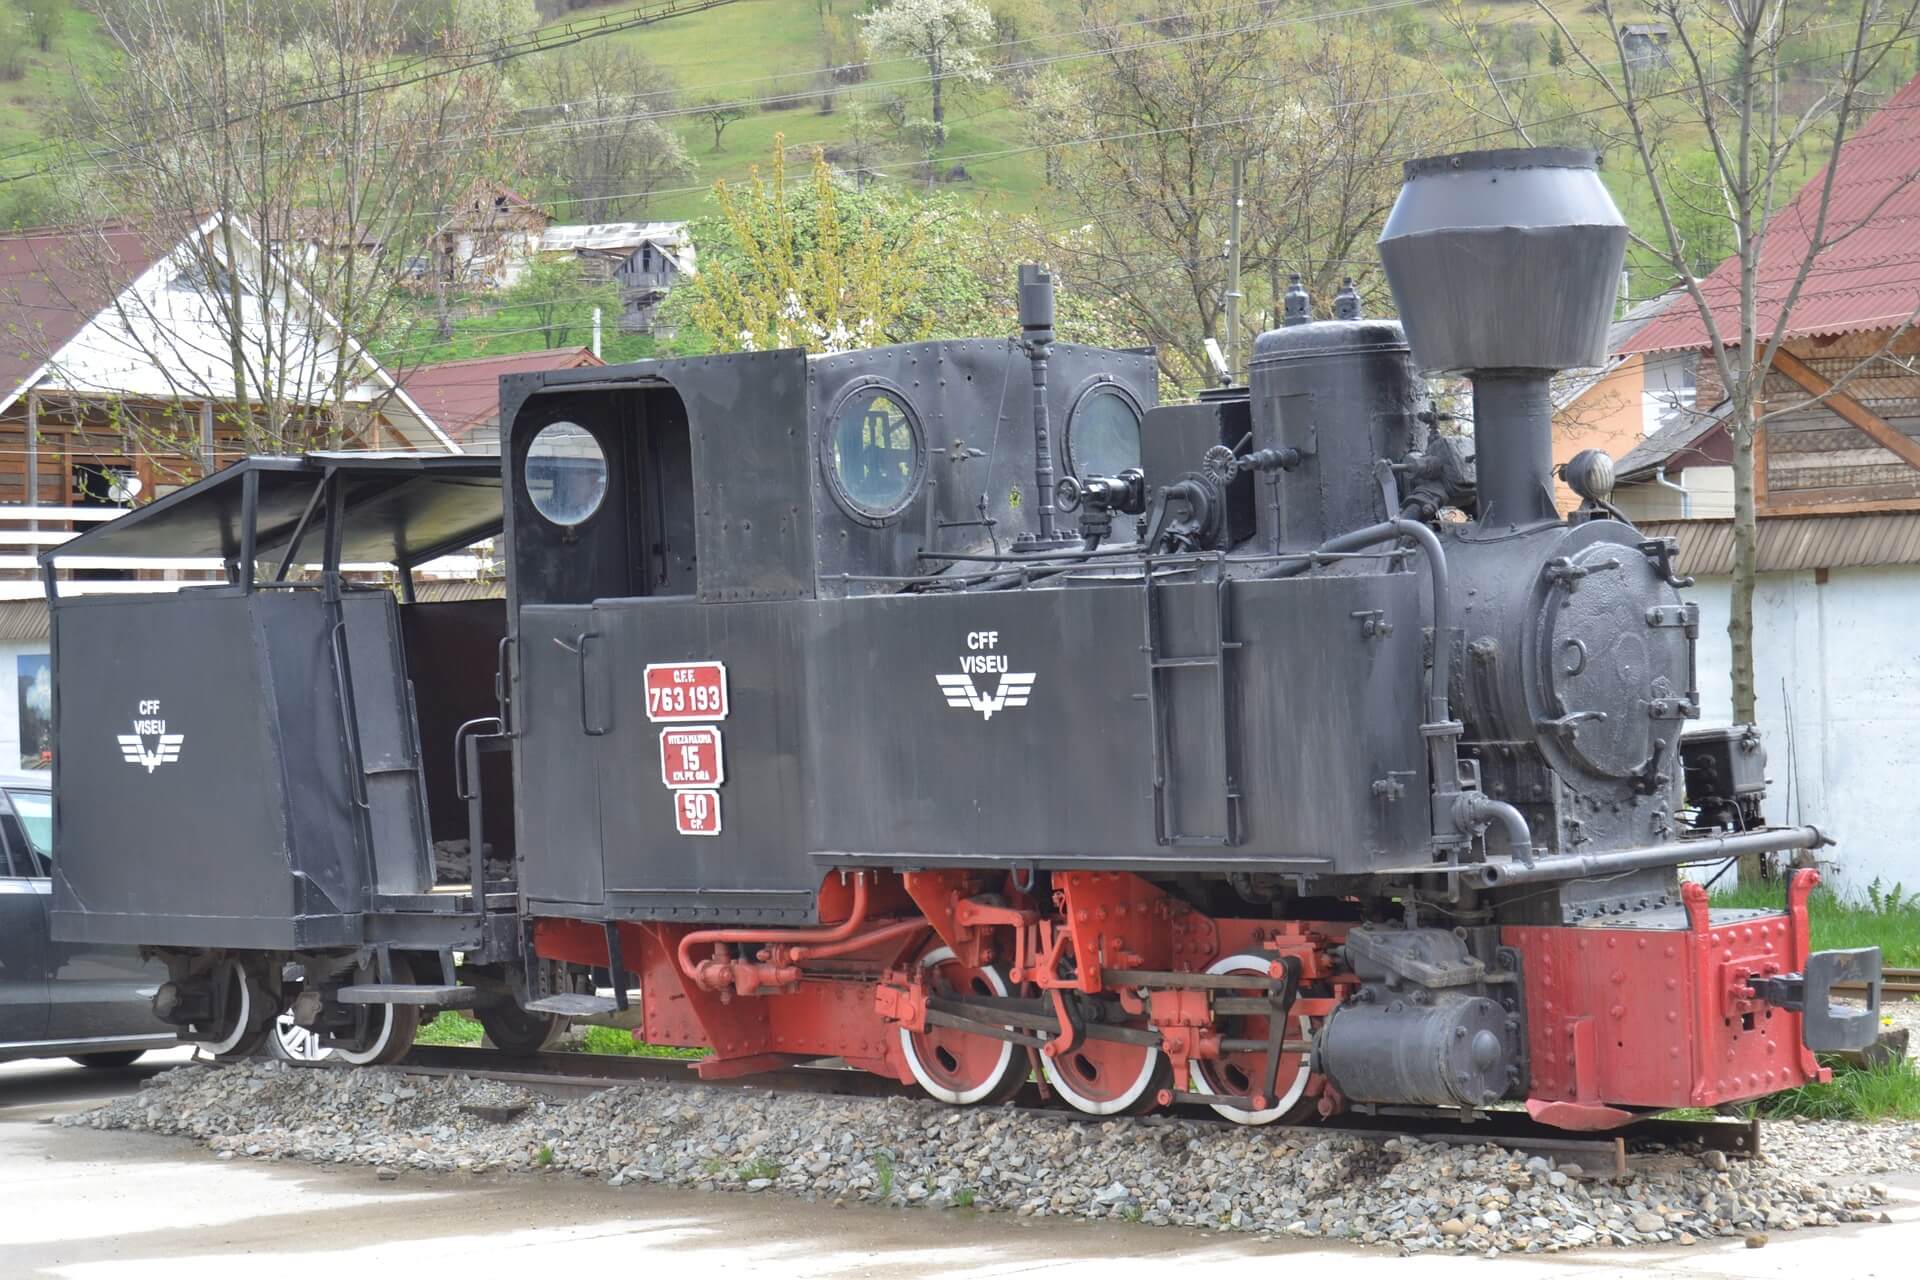 Mocănița steam train